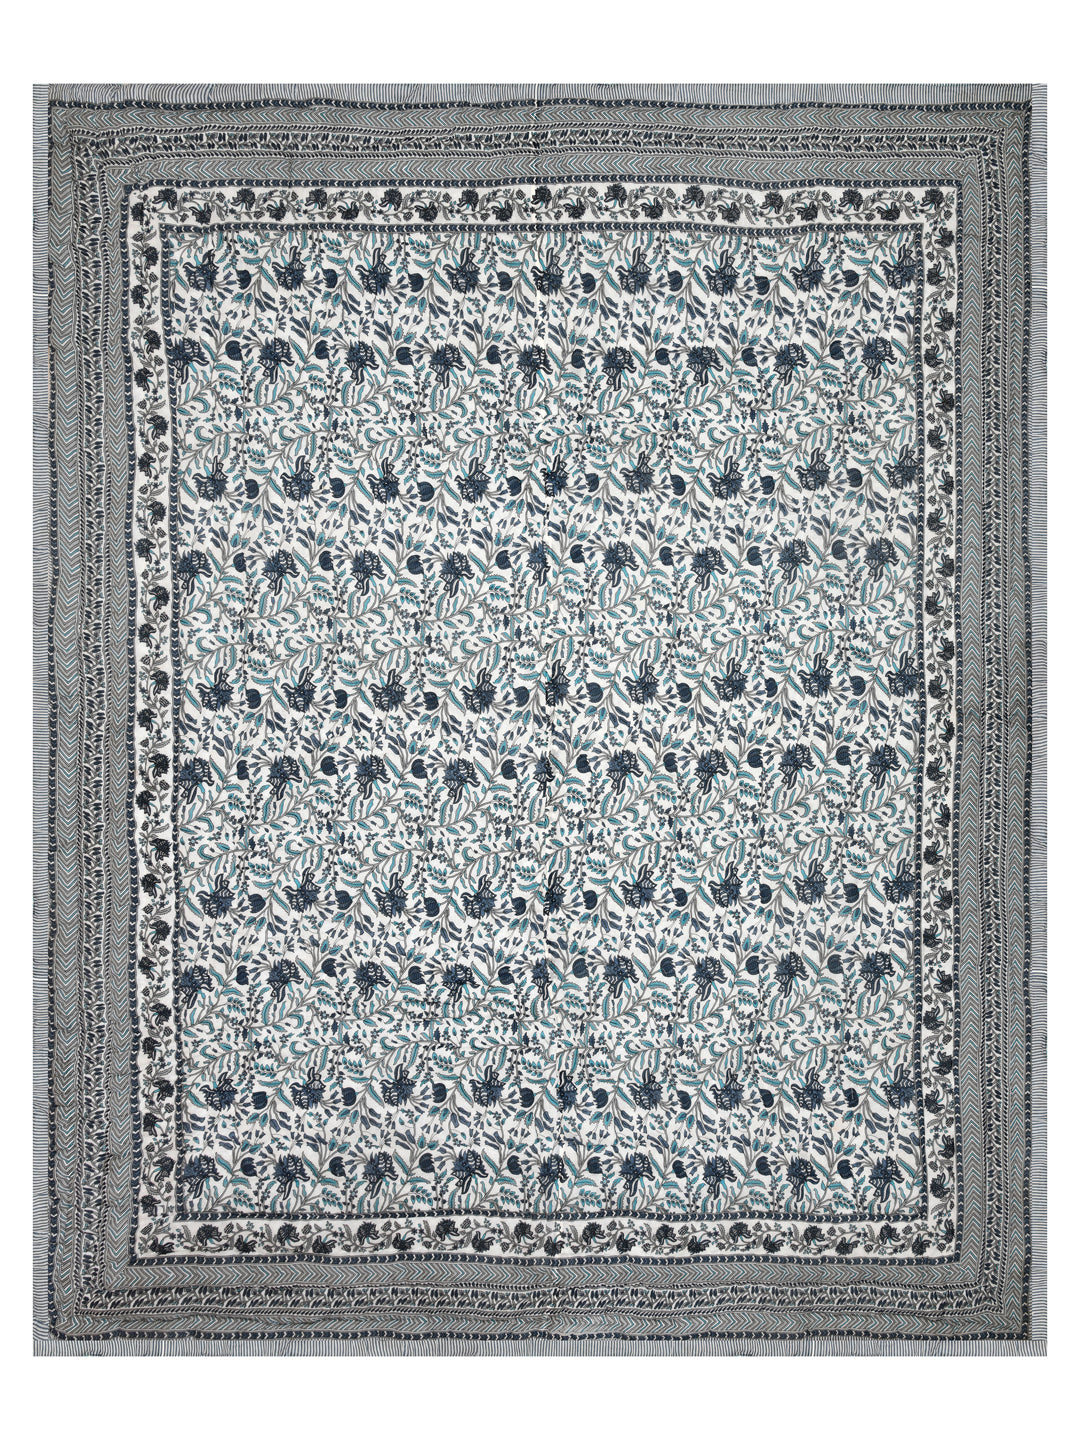 Double King Handblock printed Cotton Jaipuri Razai/Quilt